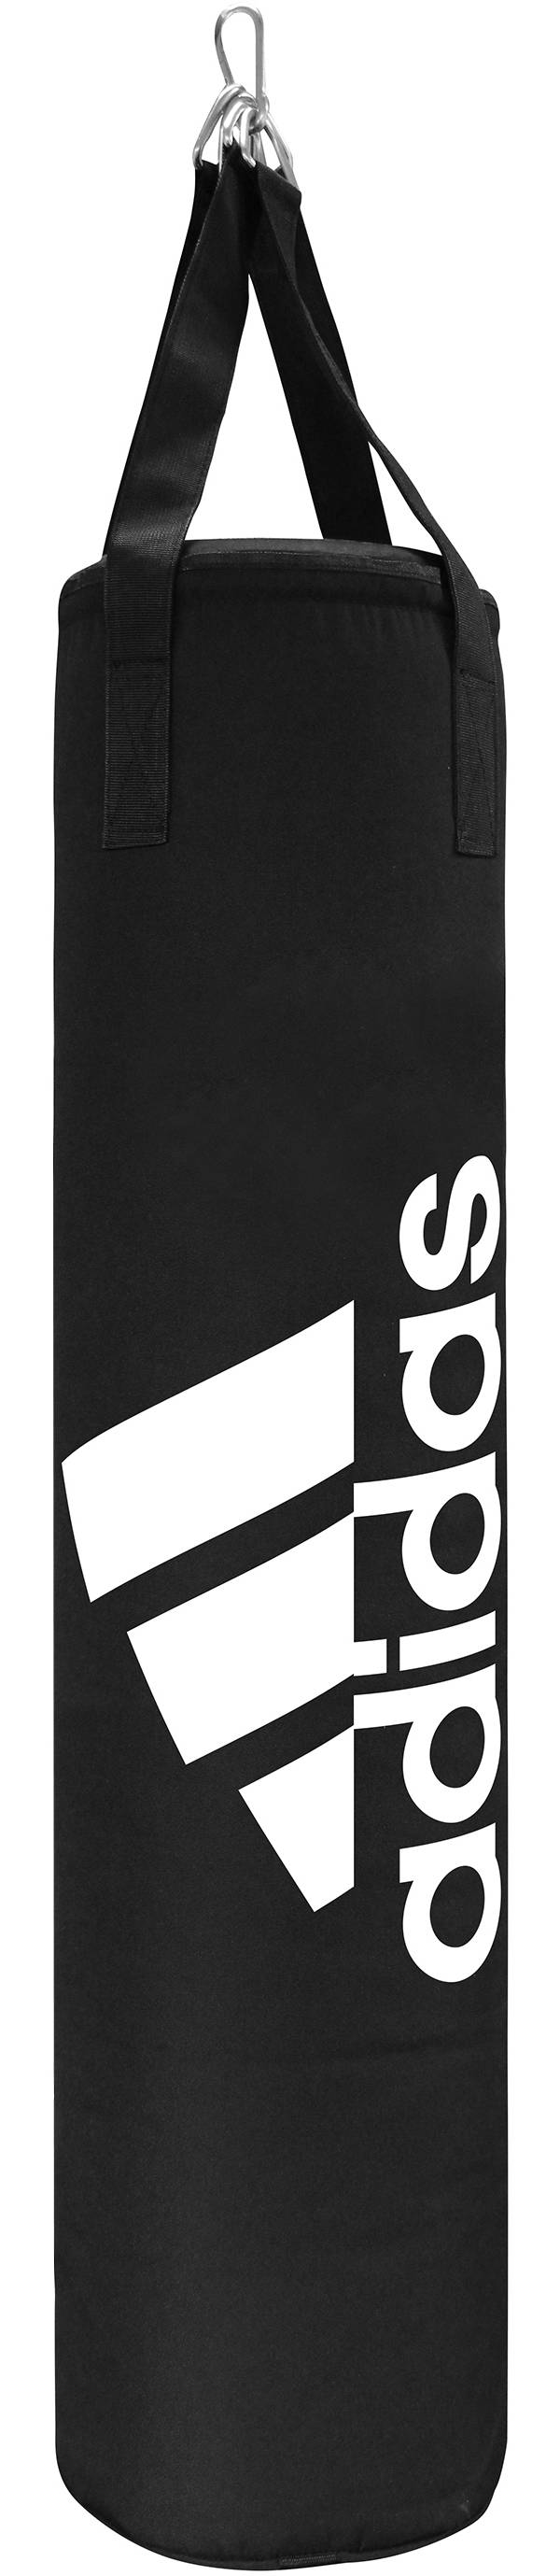 adidas Dymax Boxing 70 lbs. Heavy Bag product image